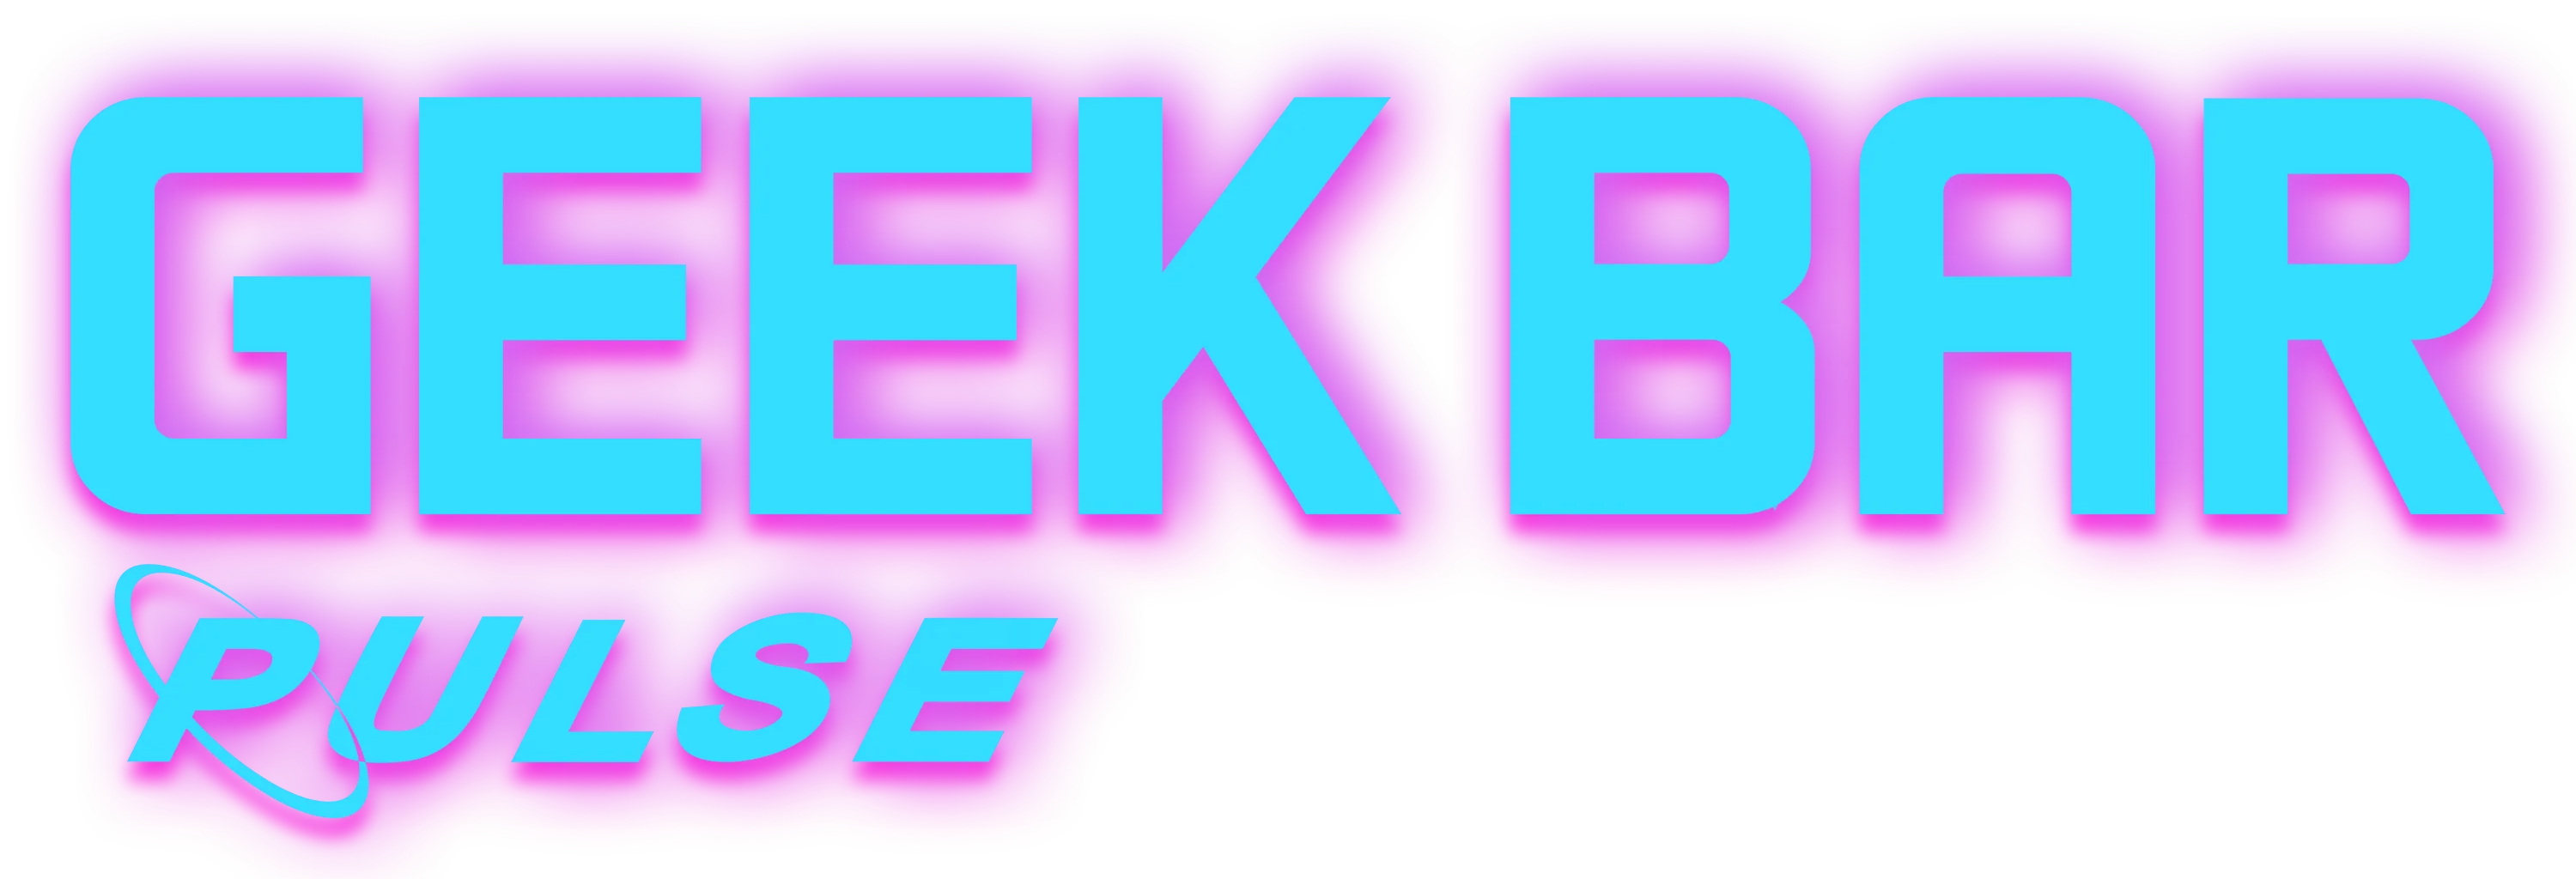 GEEK BAR PULSE Disposable Vape Logo 613837d2 f0fa 4855 a3d7 c504f53592f4